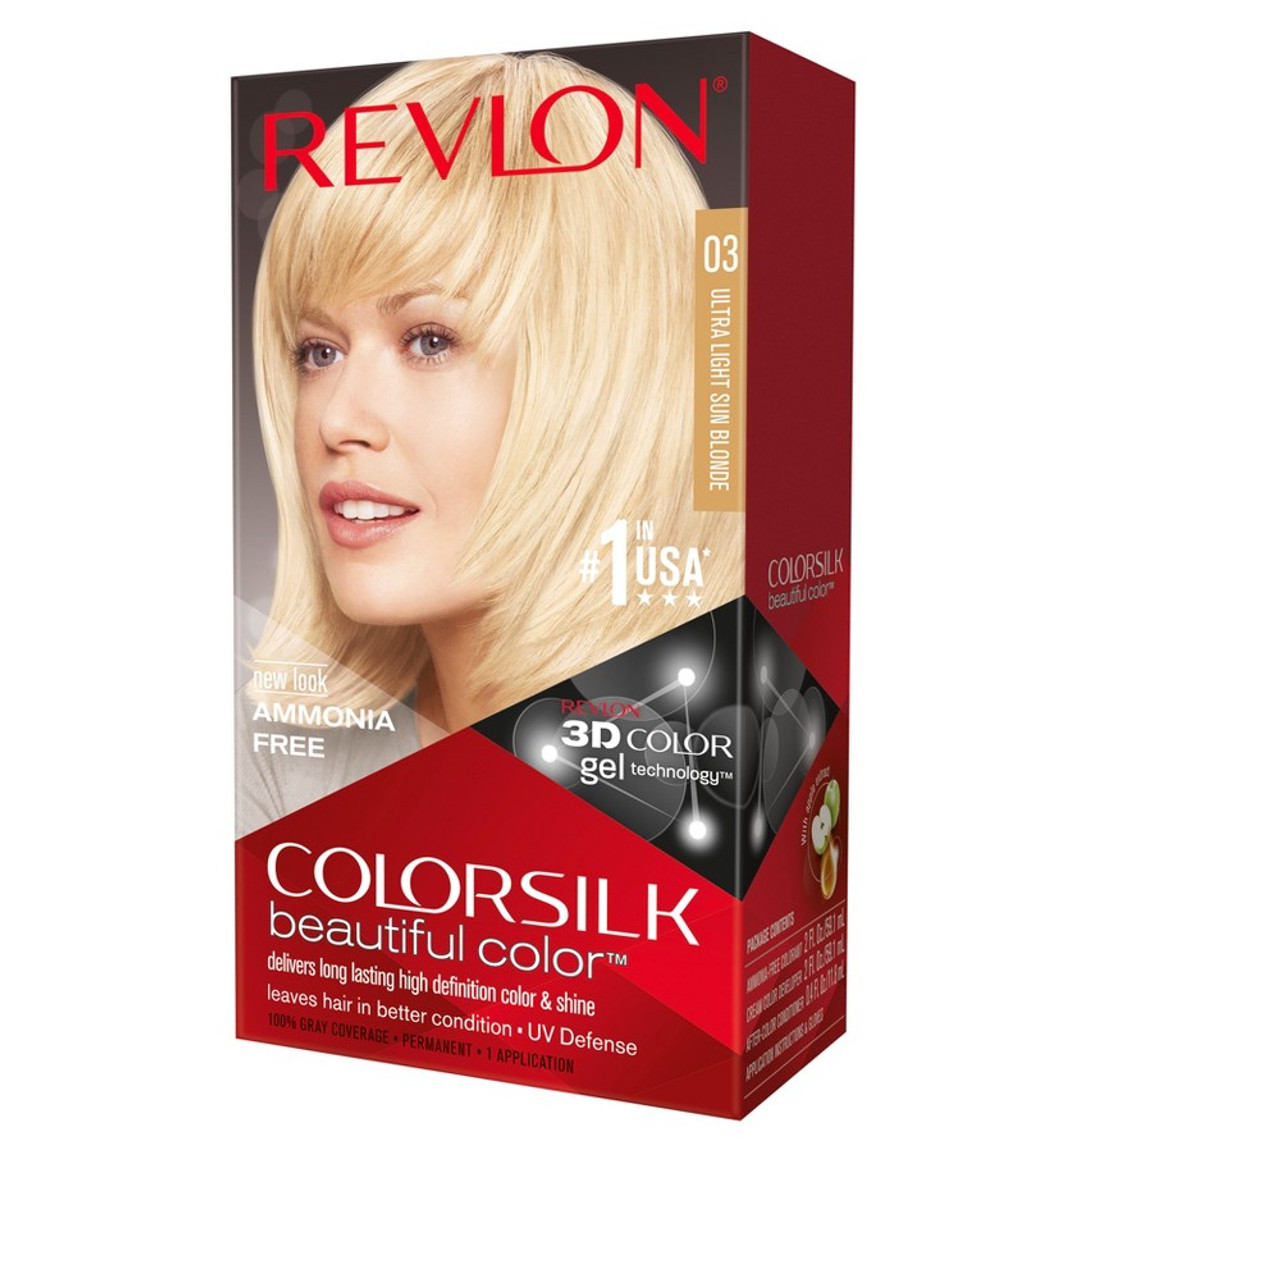 Revlon Colorsilk Beautiful Color Ammonia Free Permanent Haircolor